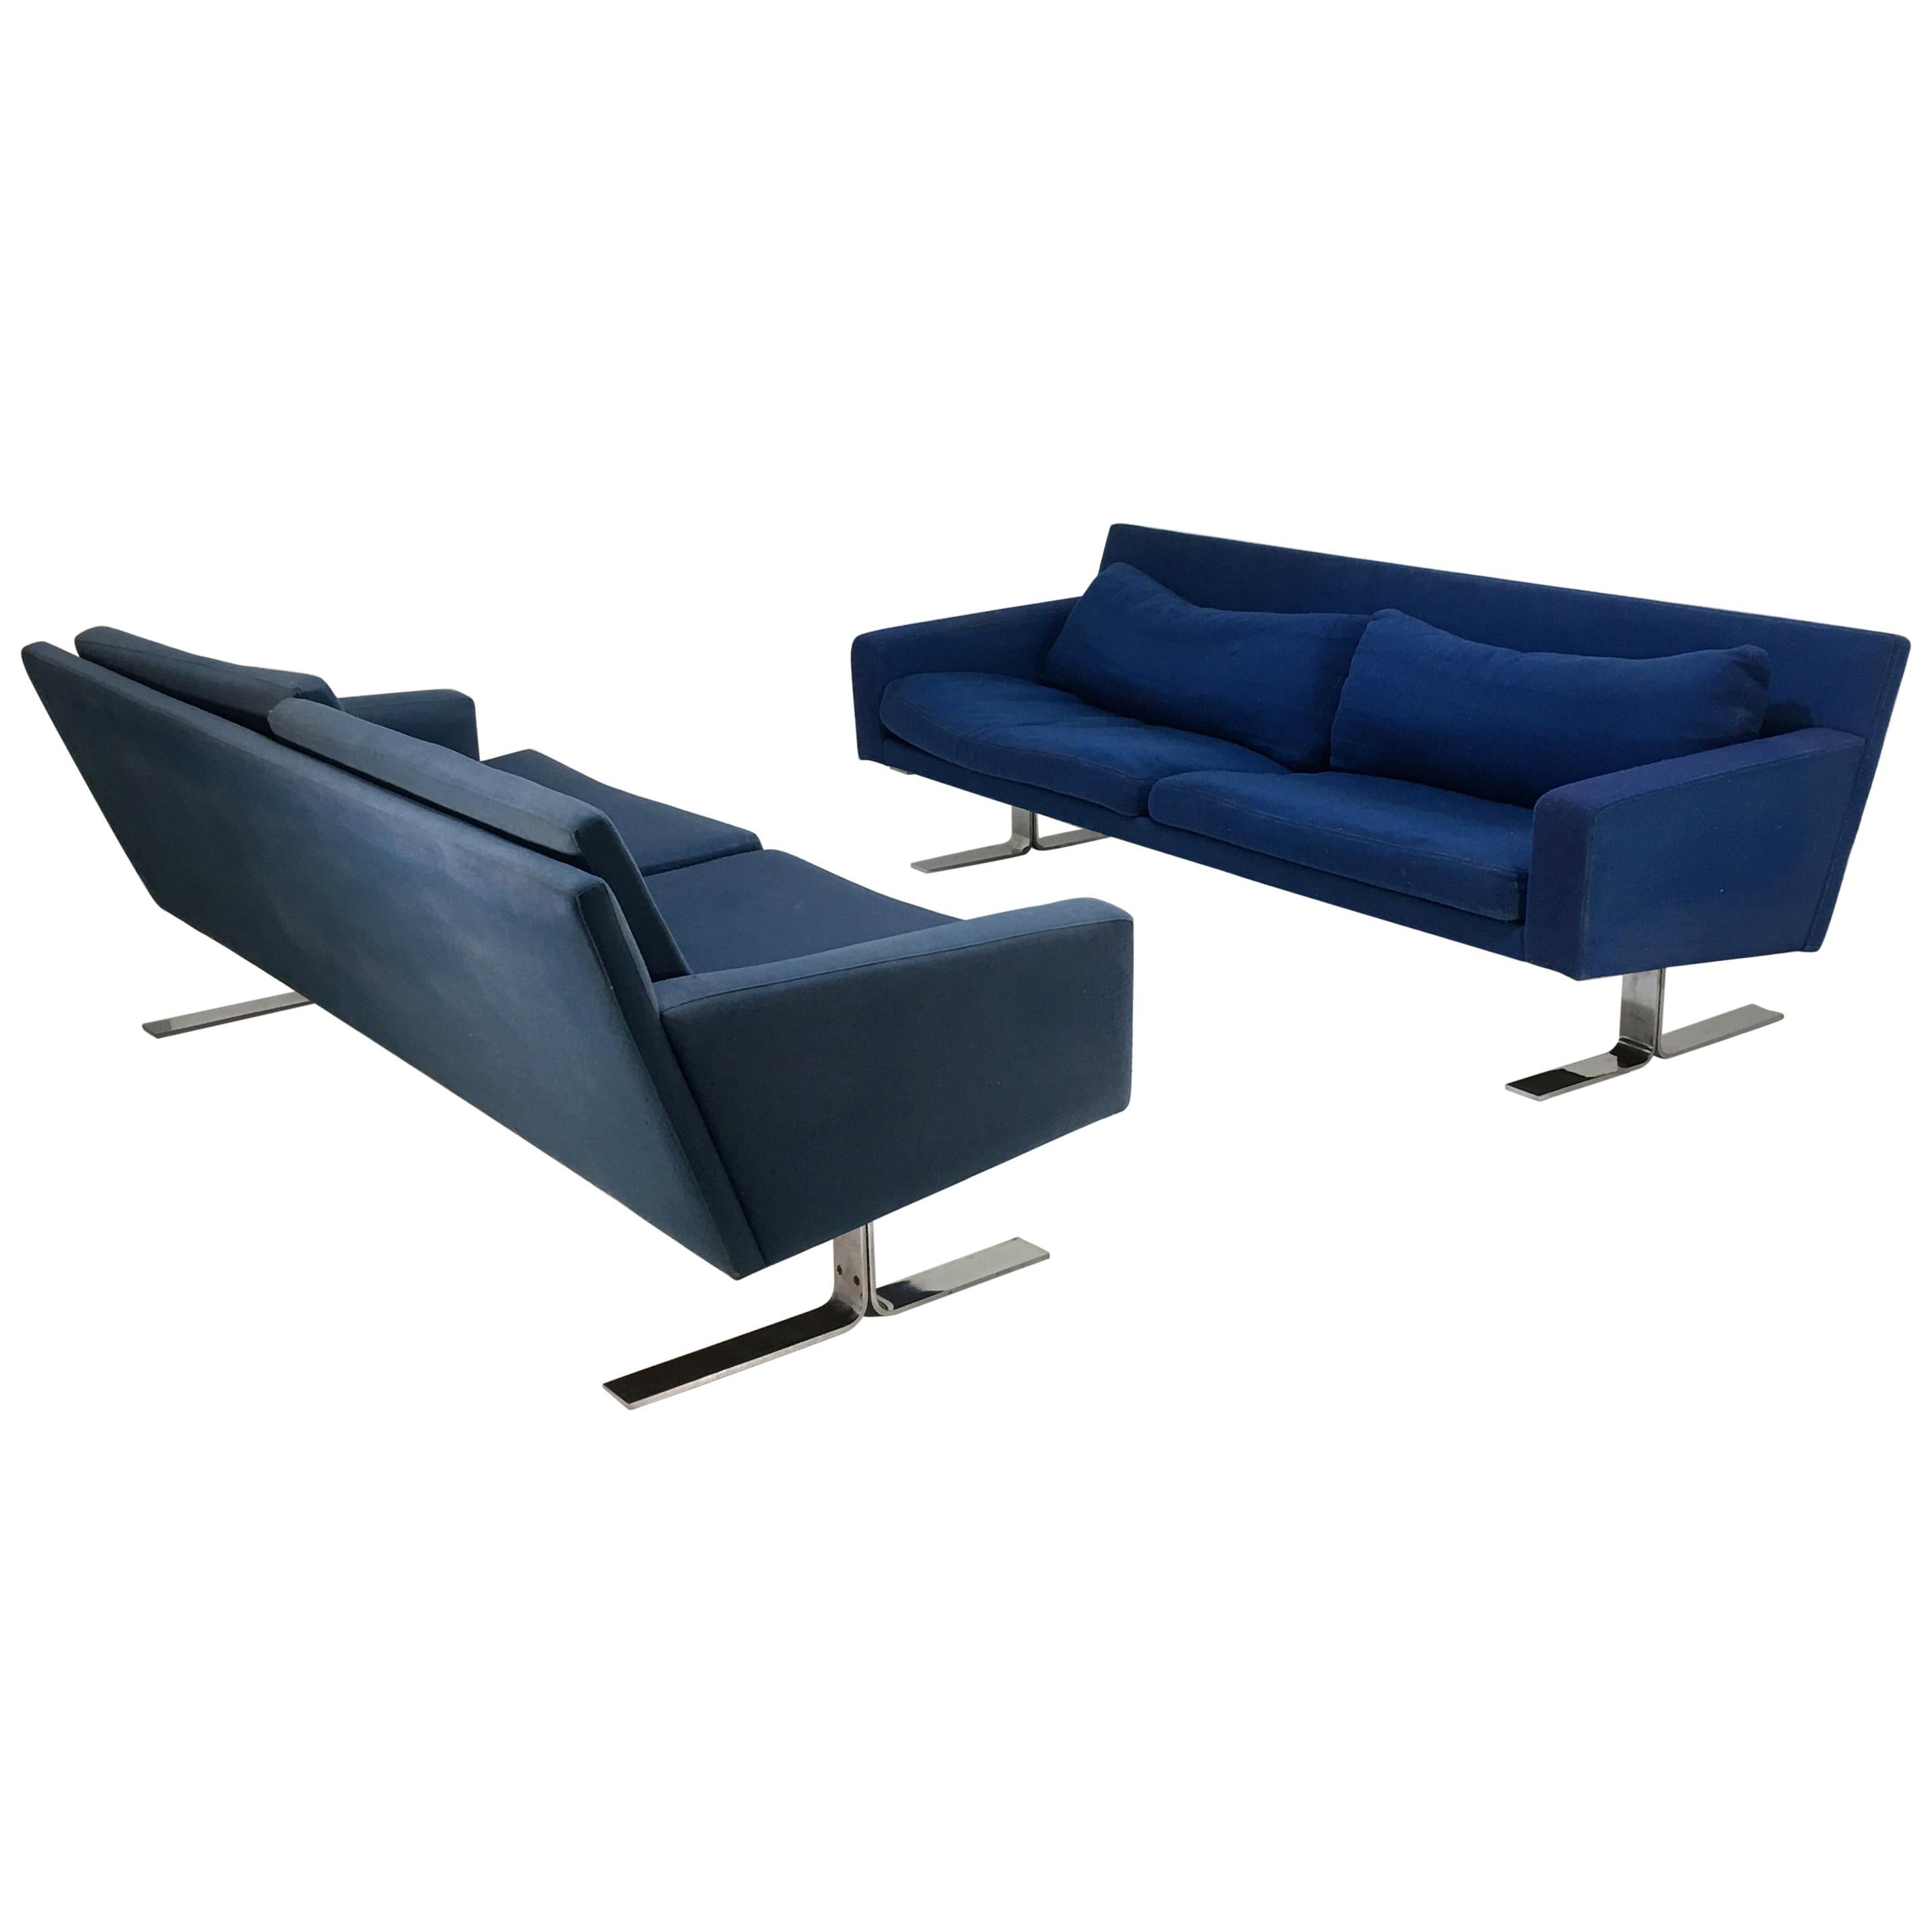 Two Sofas by Erik Ole Jorgensen for DUX Furniture